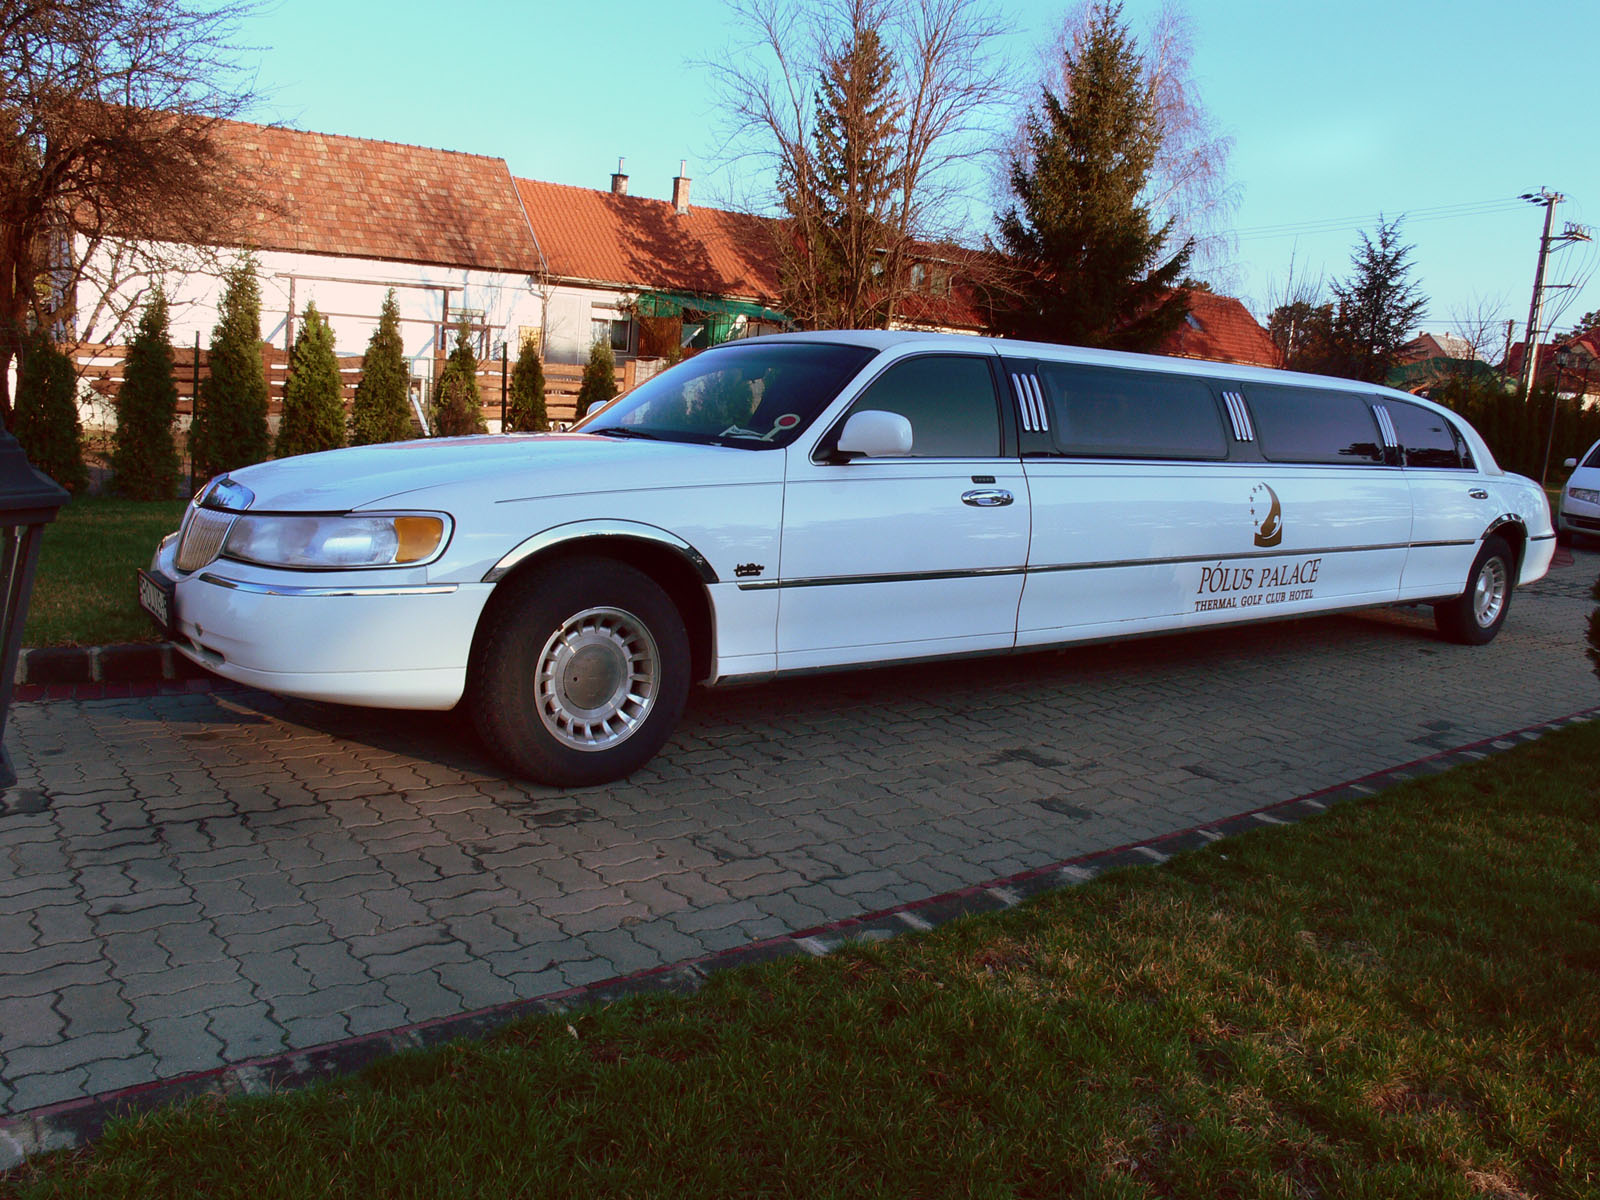 Pólus Palace taxi